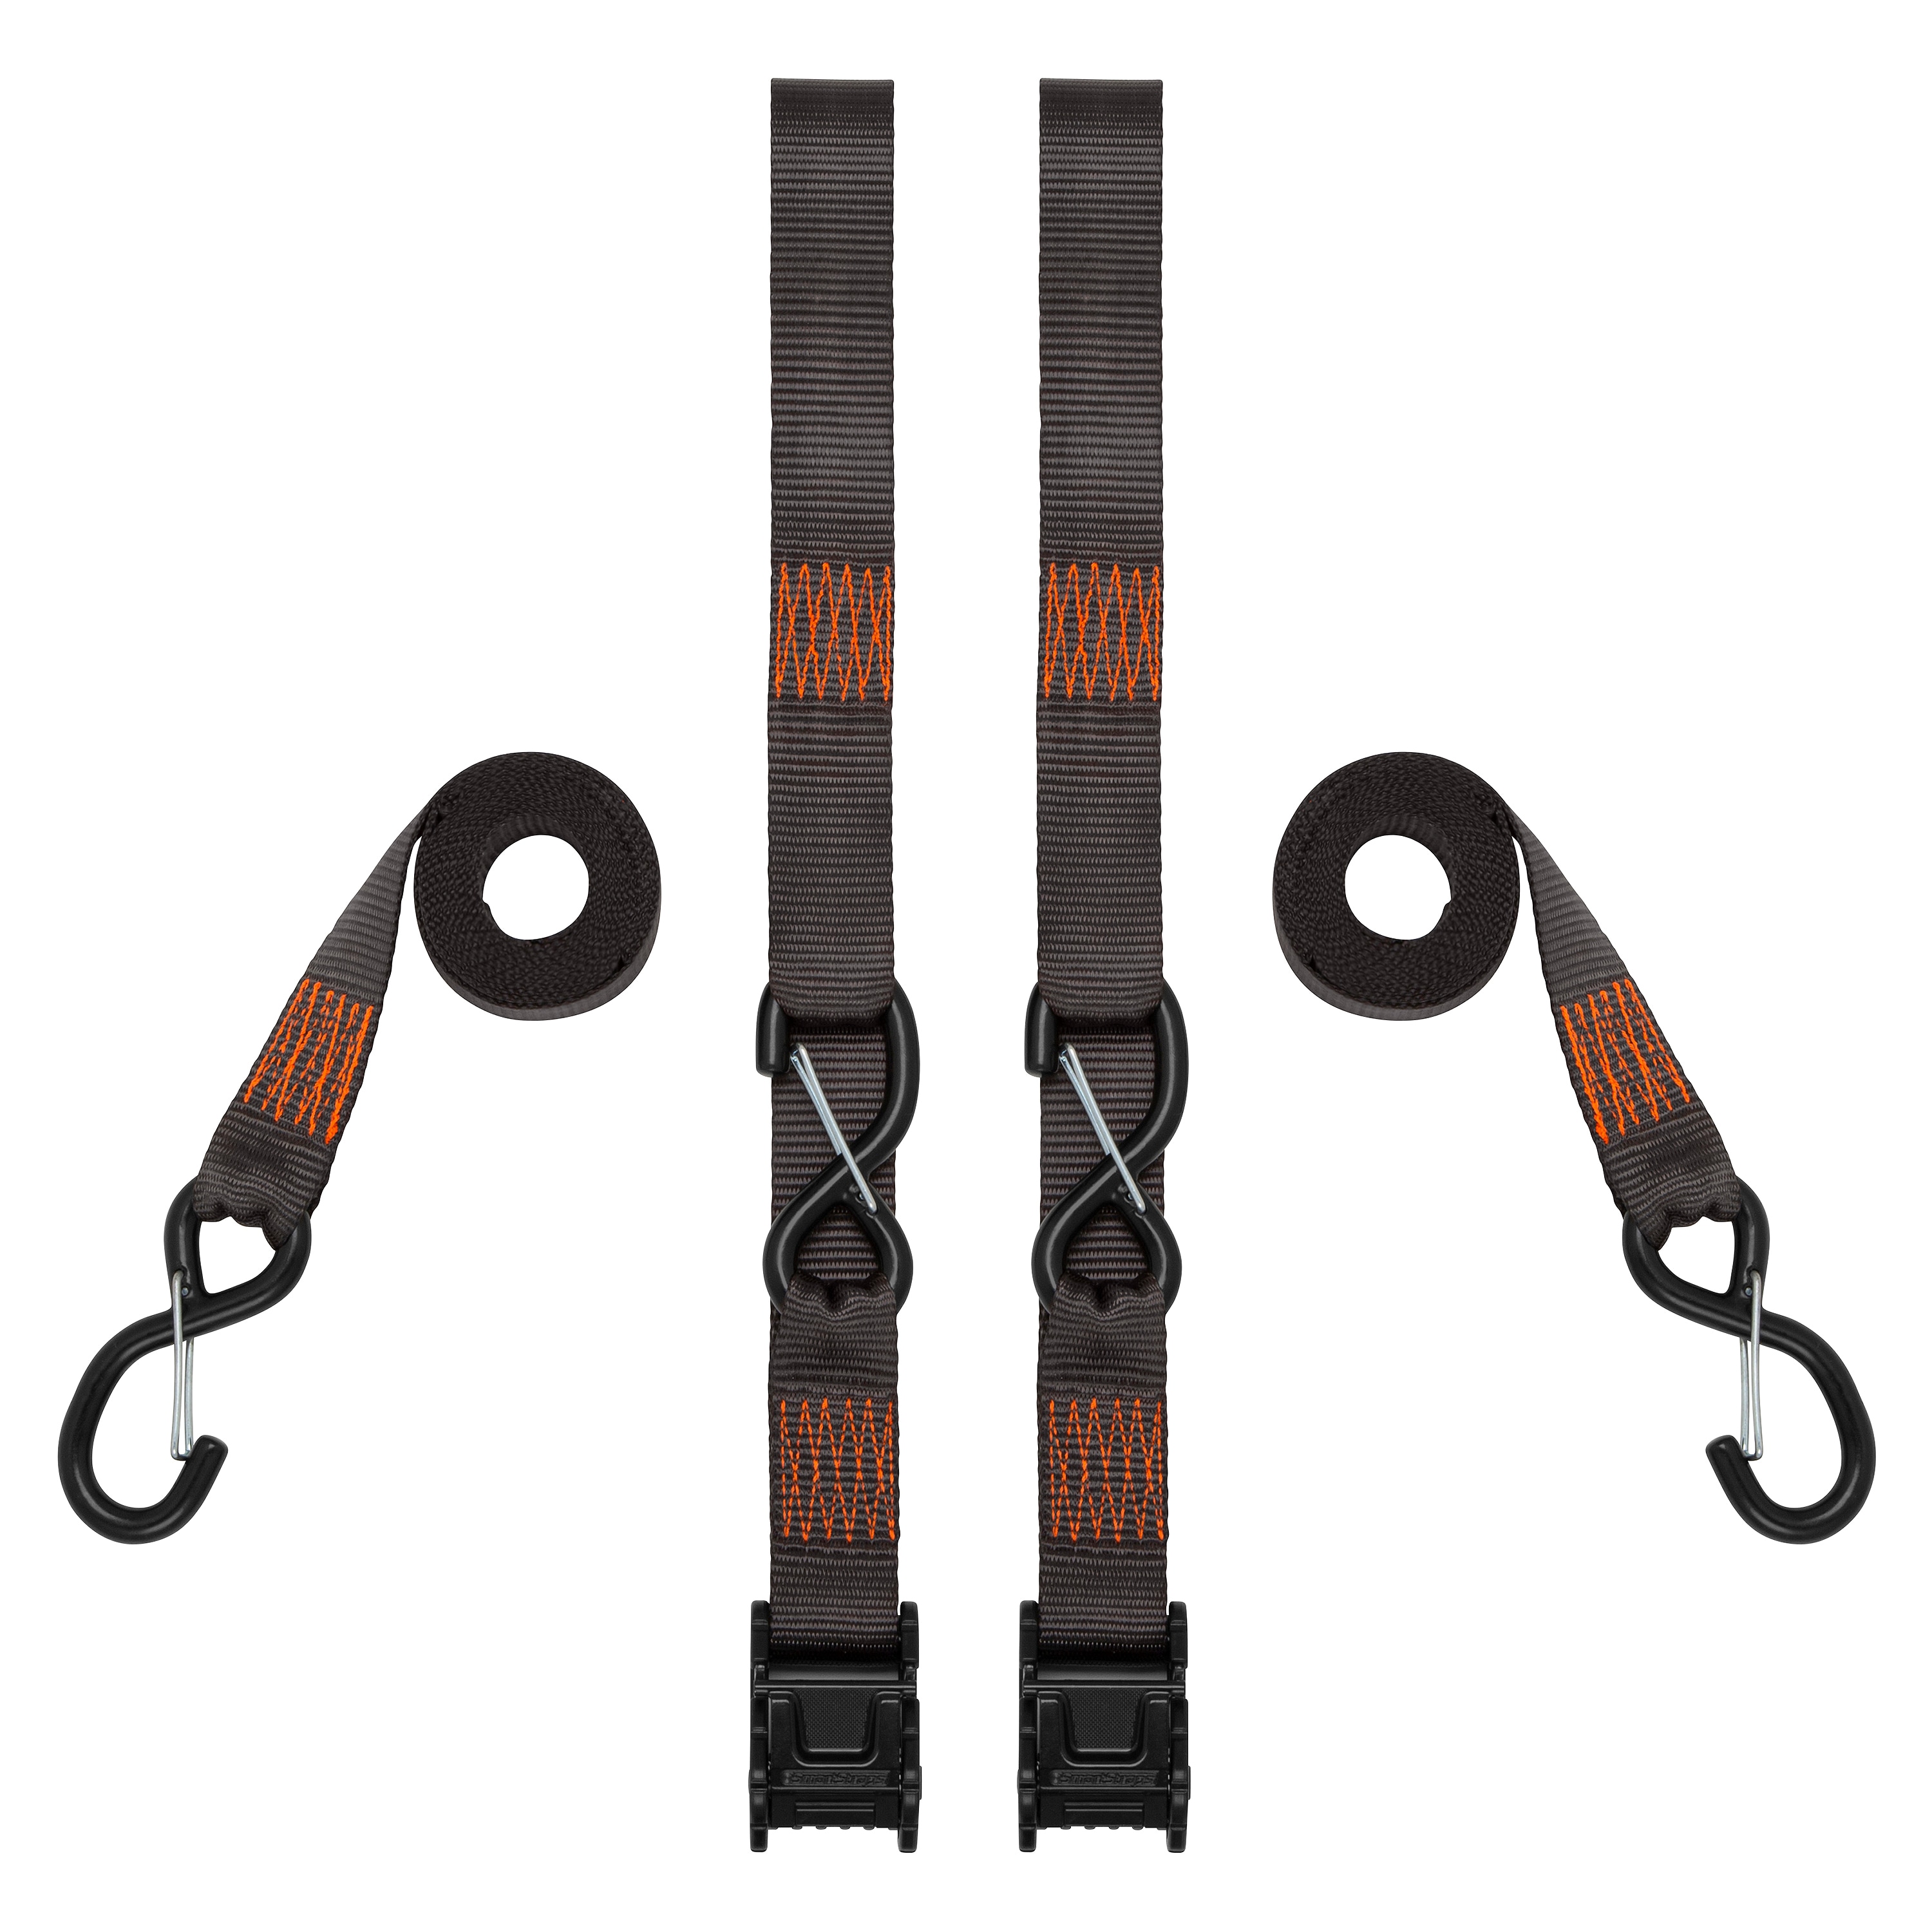 Webbing Strap Tie Brand Ladder Lock Buckle Adjustable for Dogs